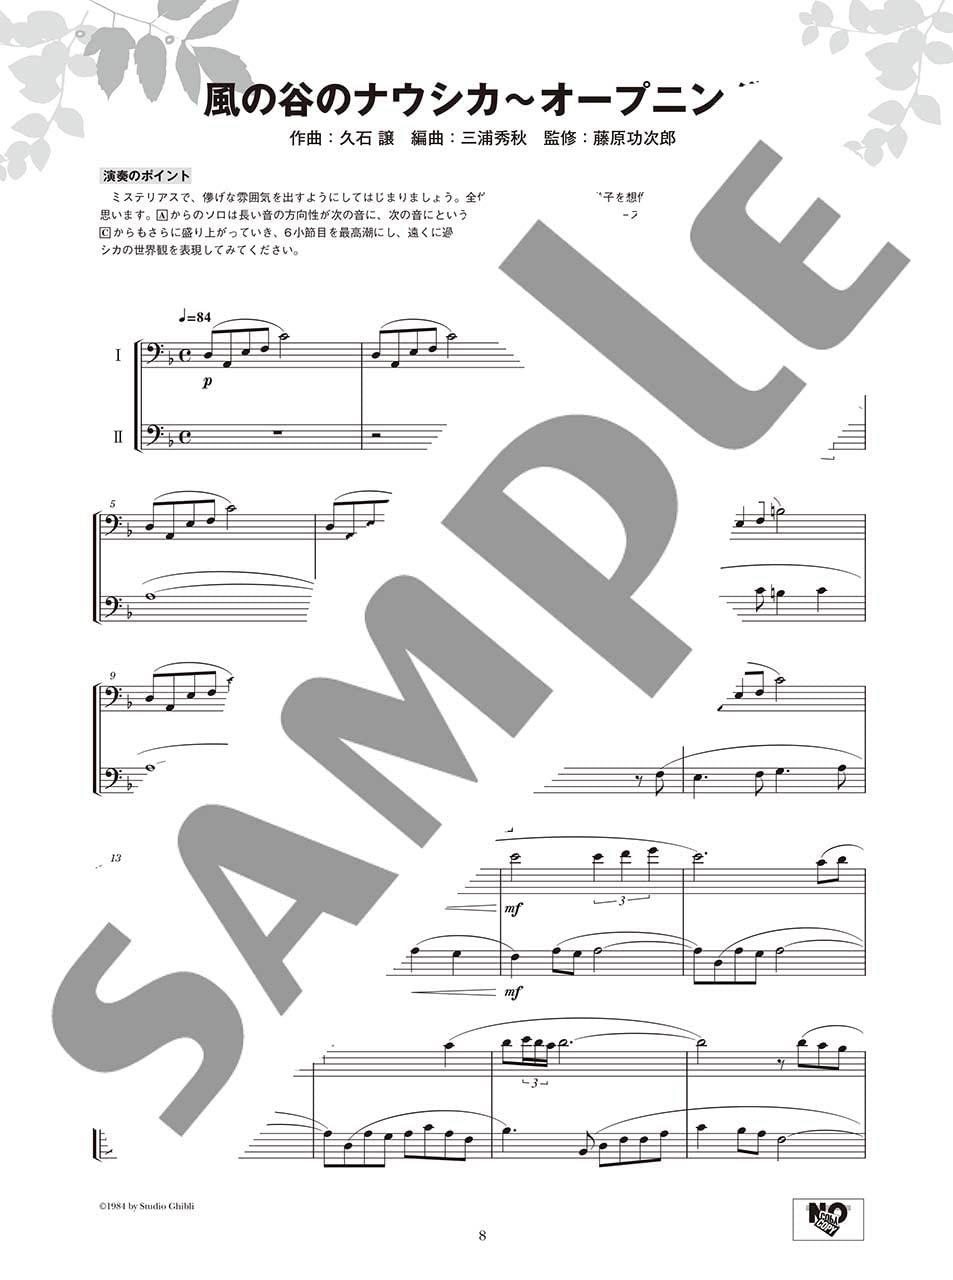 Ensemble de Ghibli: Studio Ghibli für Posaunenensemble (Pre-Intermediate) Notenbuch